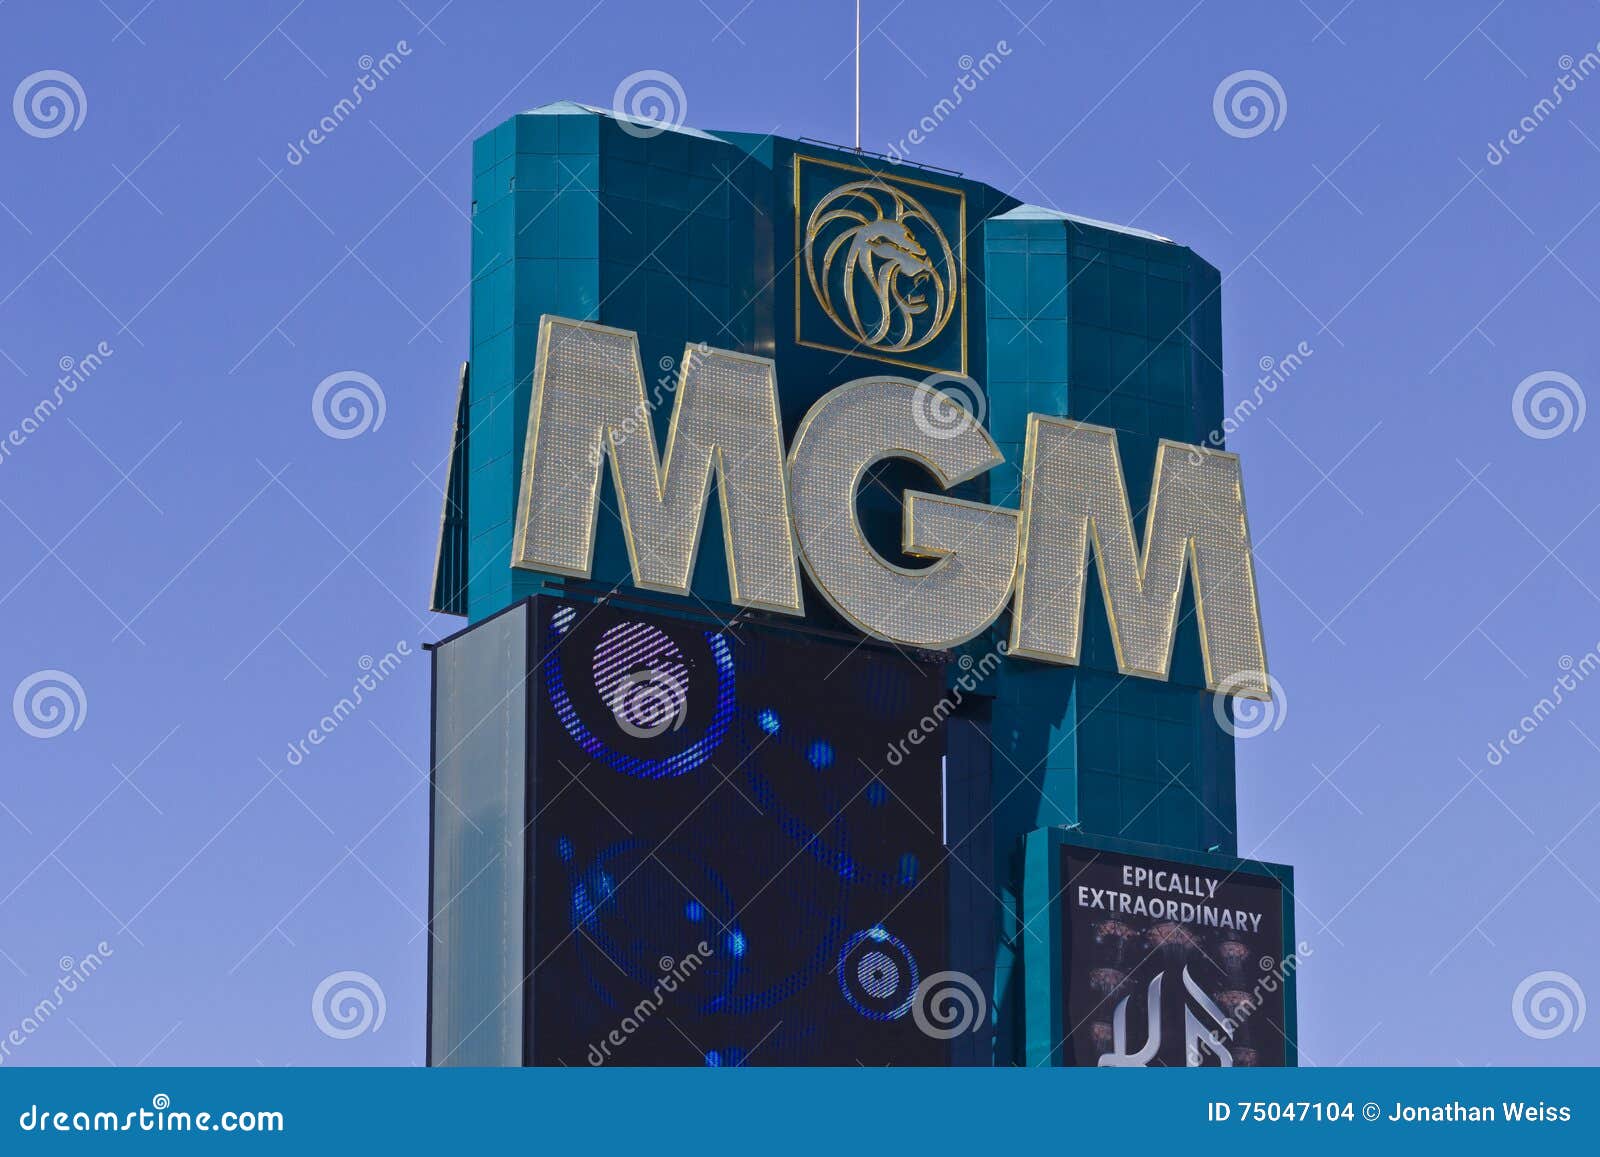 Mandalay Bay Las Vegas Logo Stock Photos - Free & Royalty-Free Stock Photos  from Dreamstime